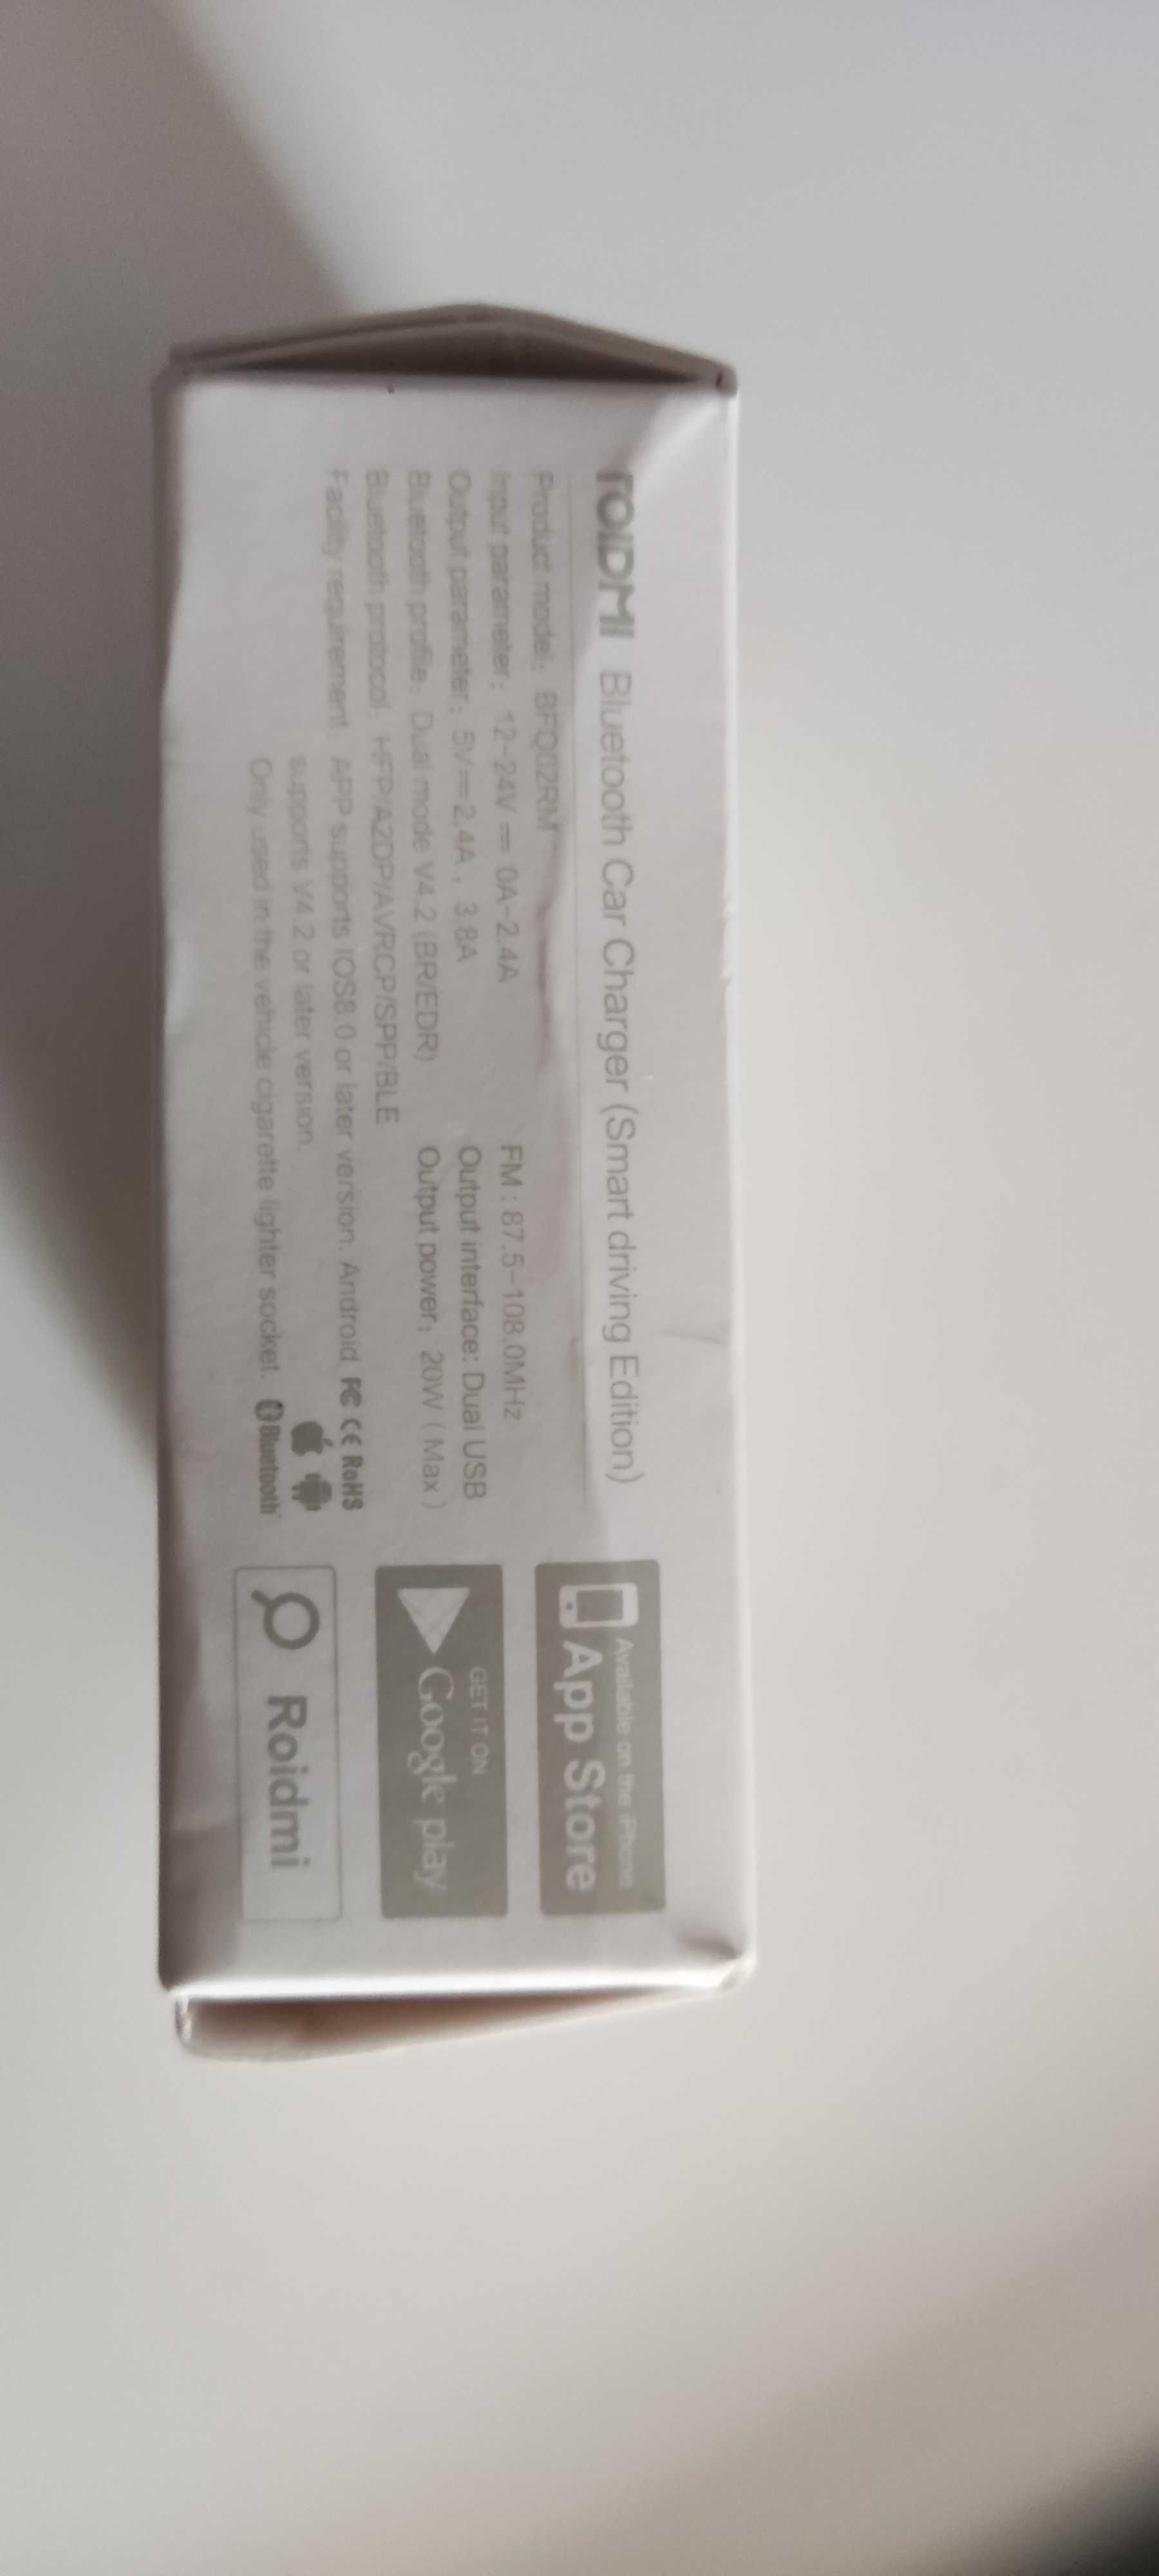 Xiaomi Rodmi Car Charger 5 in 1 Bluetooth FM Transmitter